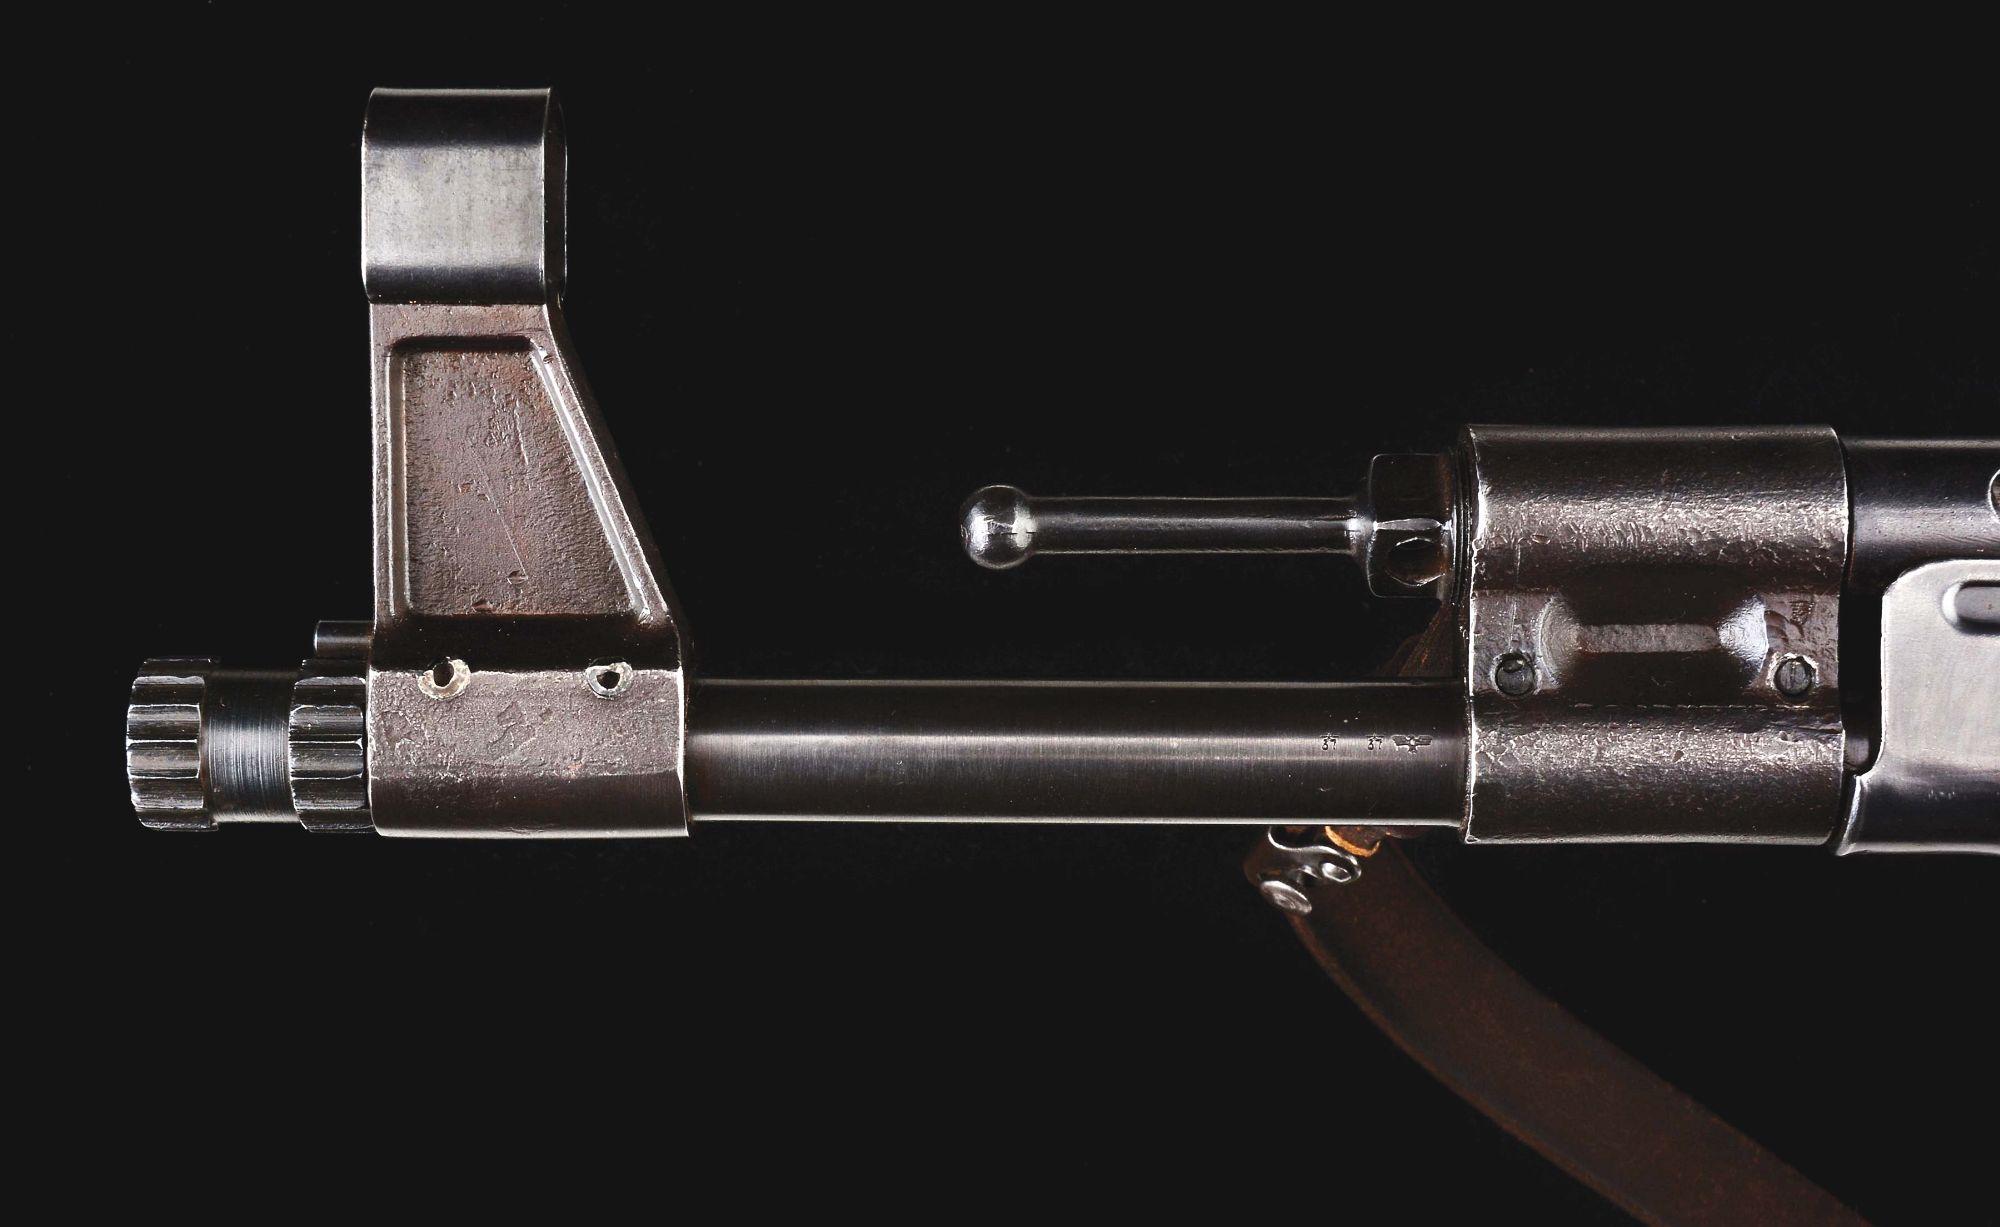 (N) Superb and Very Rare German WW2 MP 43/1 Machine Gun With Original Scope (CURIO & RELIC)